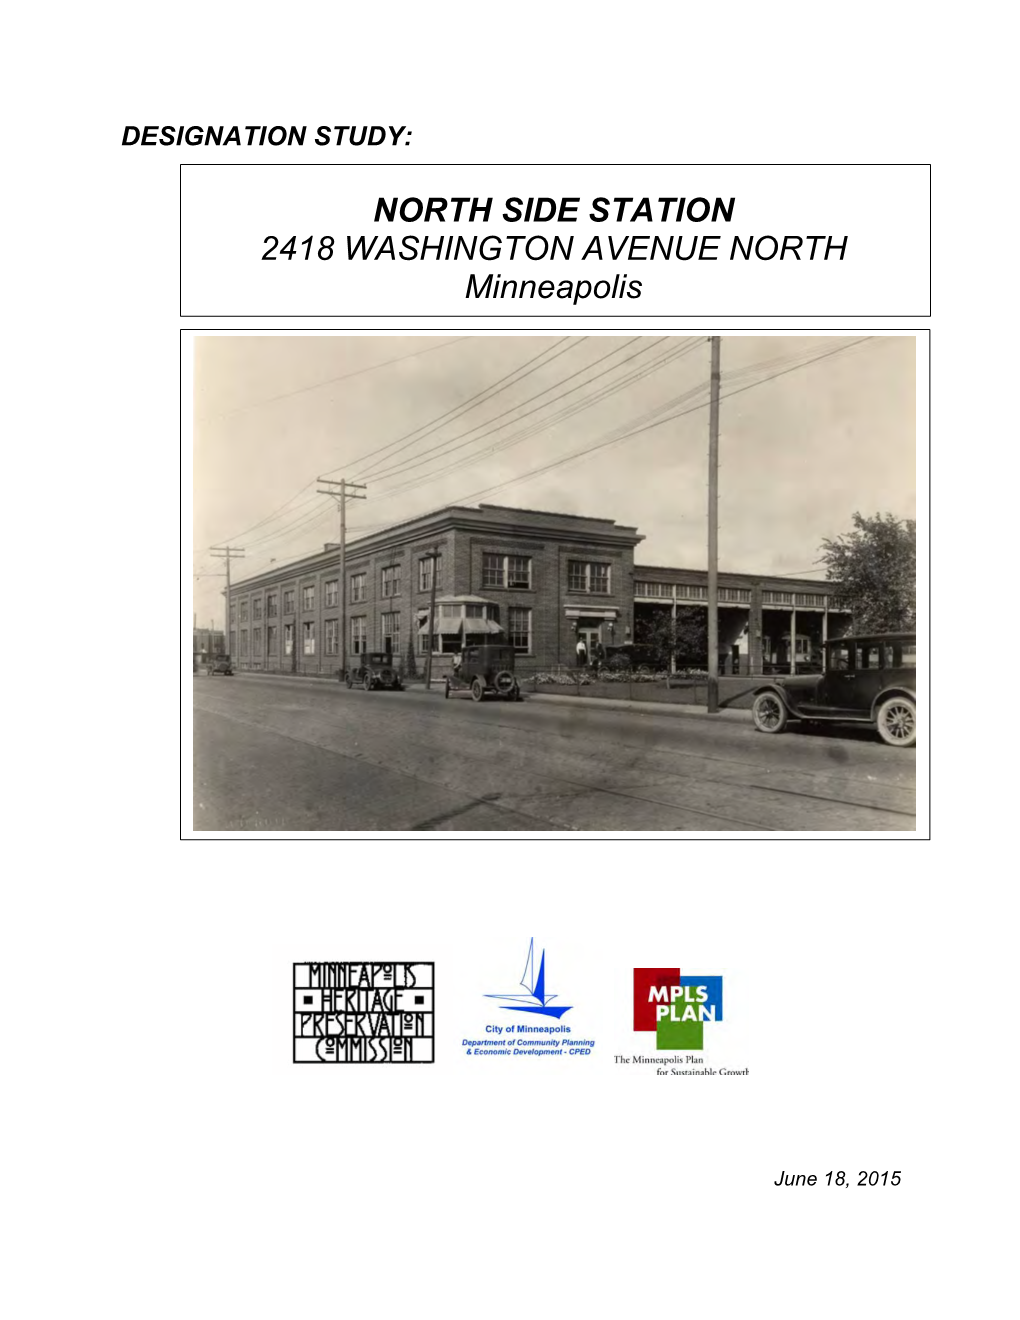 North Side Station 2418 Washington